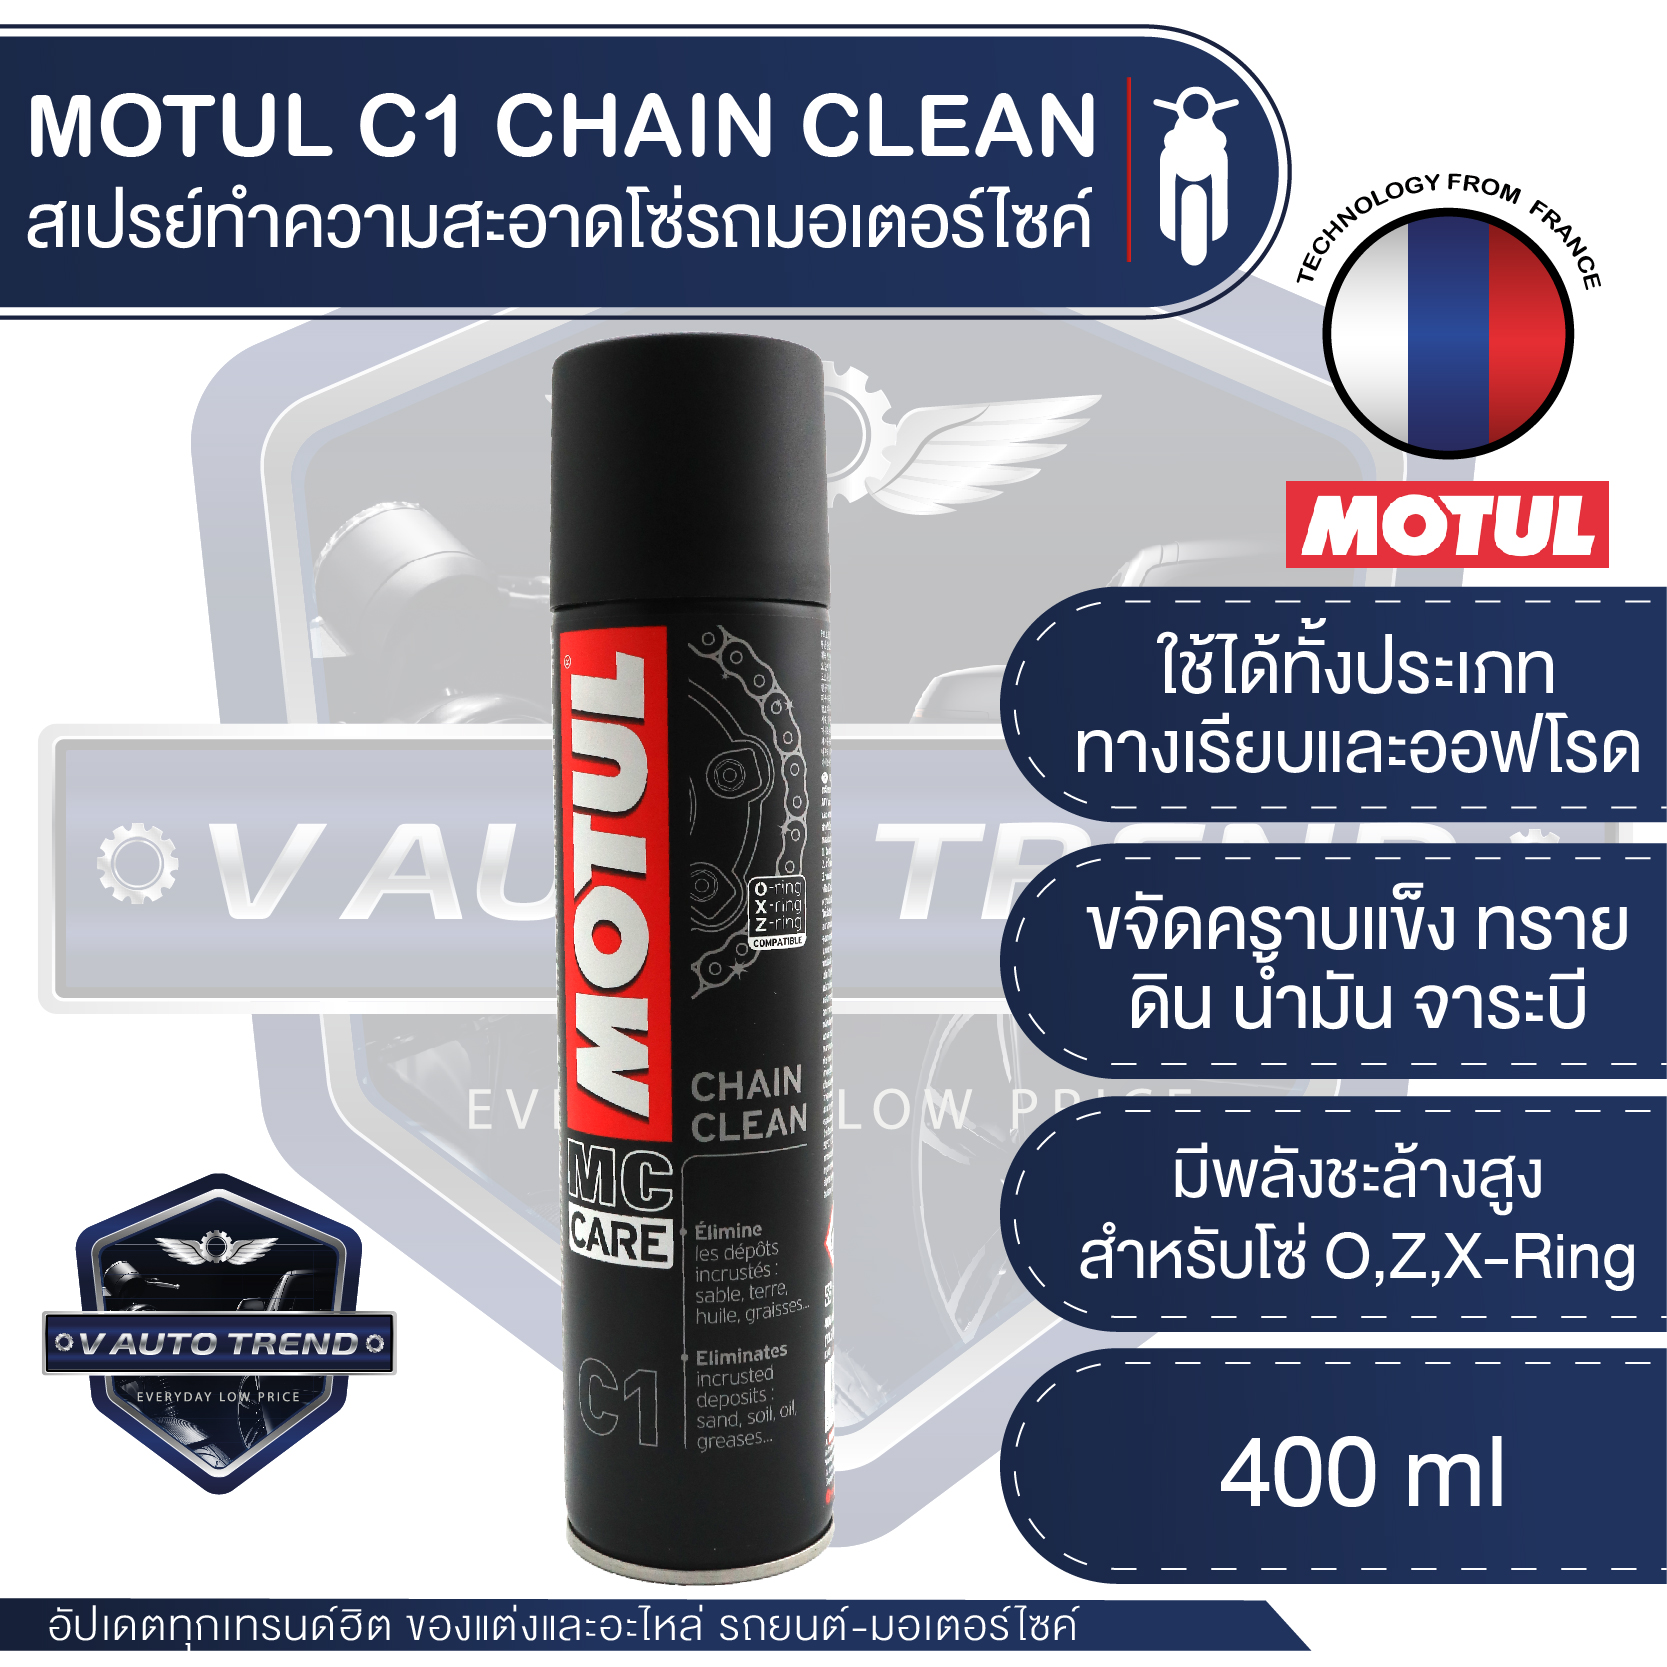 MOTUL MC CARE™ C1 CHAIN CLEAN ขนาด 400 ml. สเปรย์ล้างโซ่ มอเตอร์ไซค์ จักรยาน ทั้งทางวิบากและทางปกติ ปราศจากสารคลอรีน ไม่ทำอันตรายต่อ O-RING X-RING Z-RING